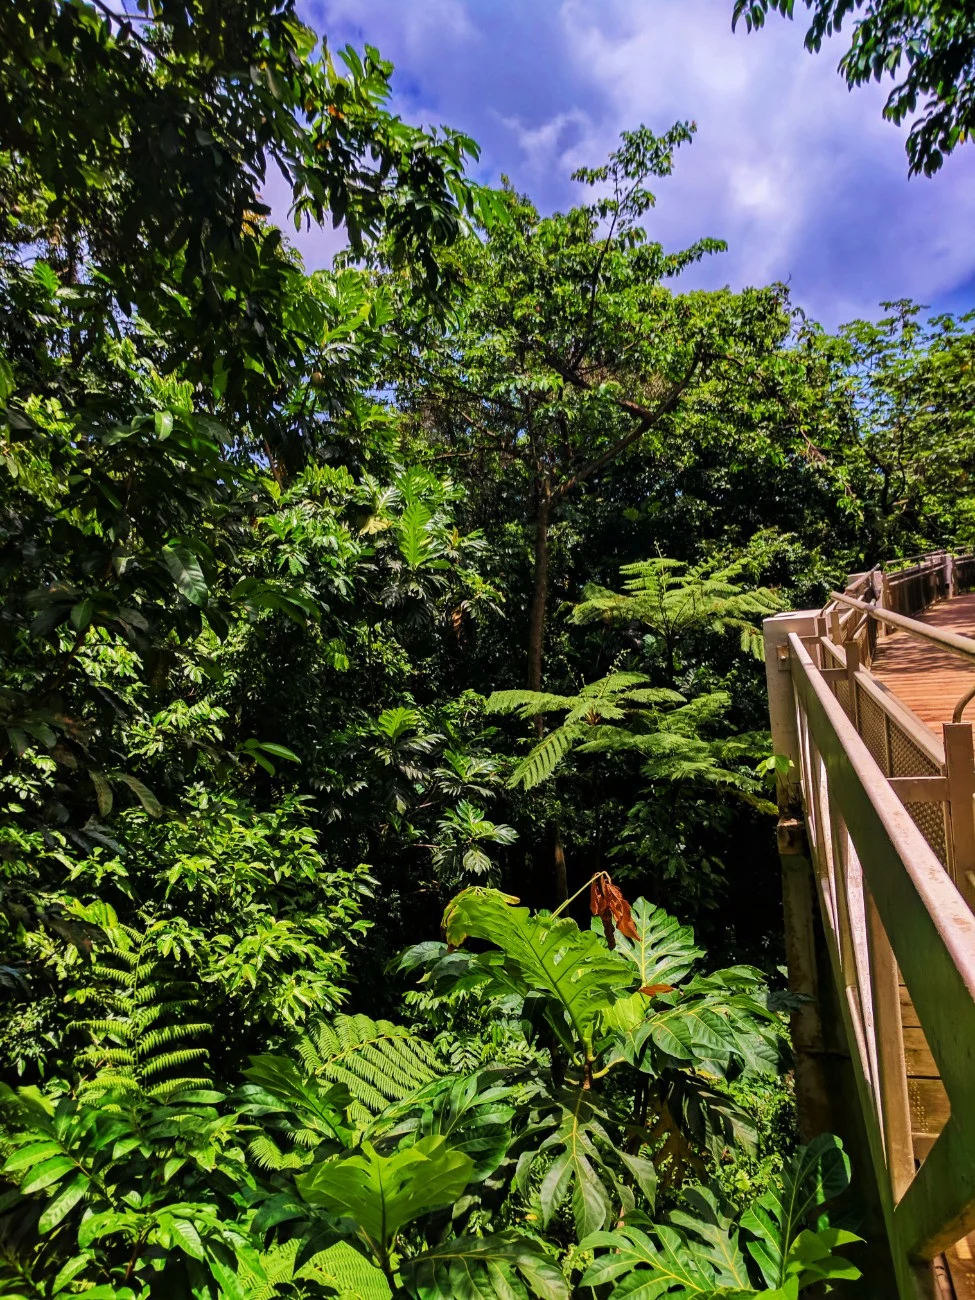 El Portal canopy walk Rainforest El Yunque National Forest Puerto Rico 1